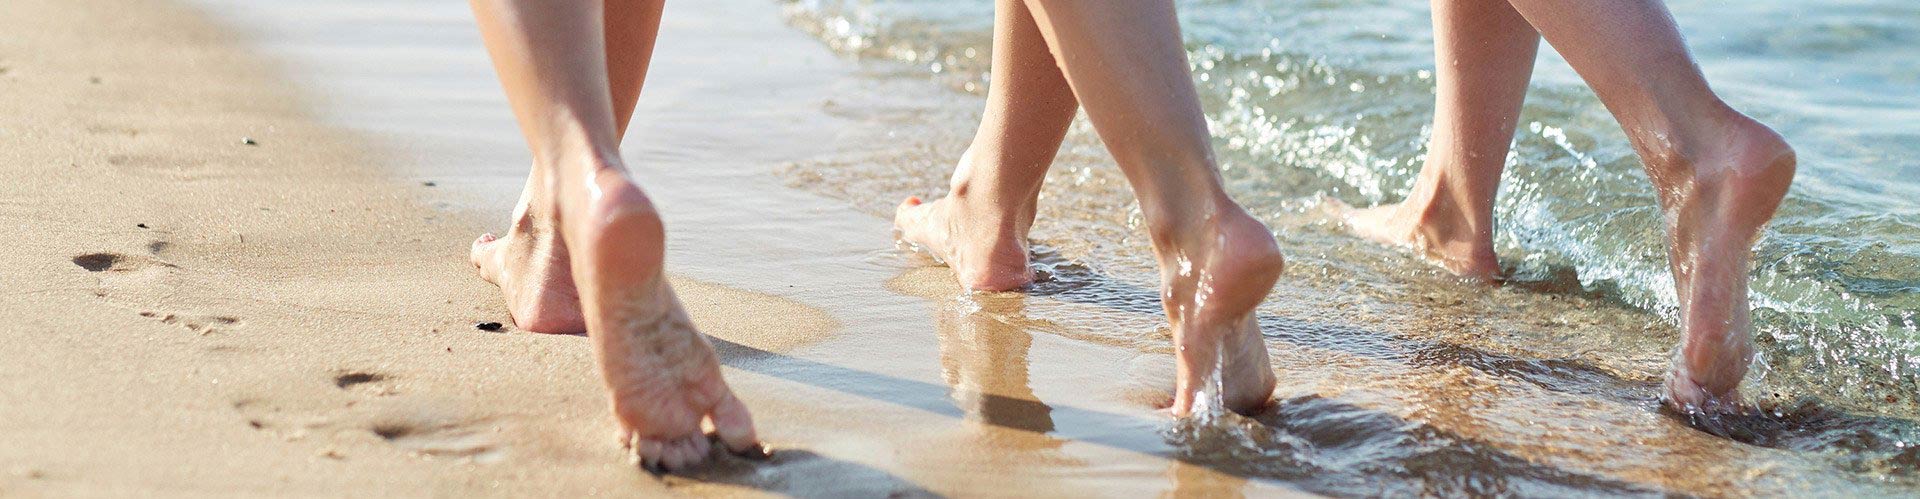 Closeup of Feet of 3 People Walking on Beach